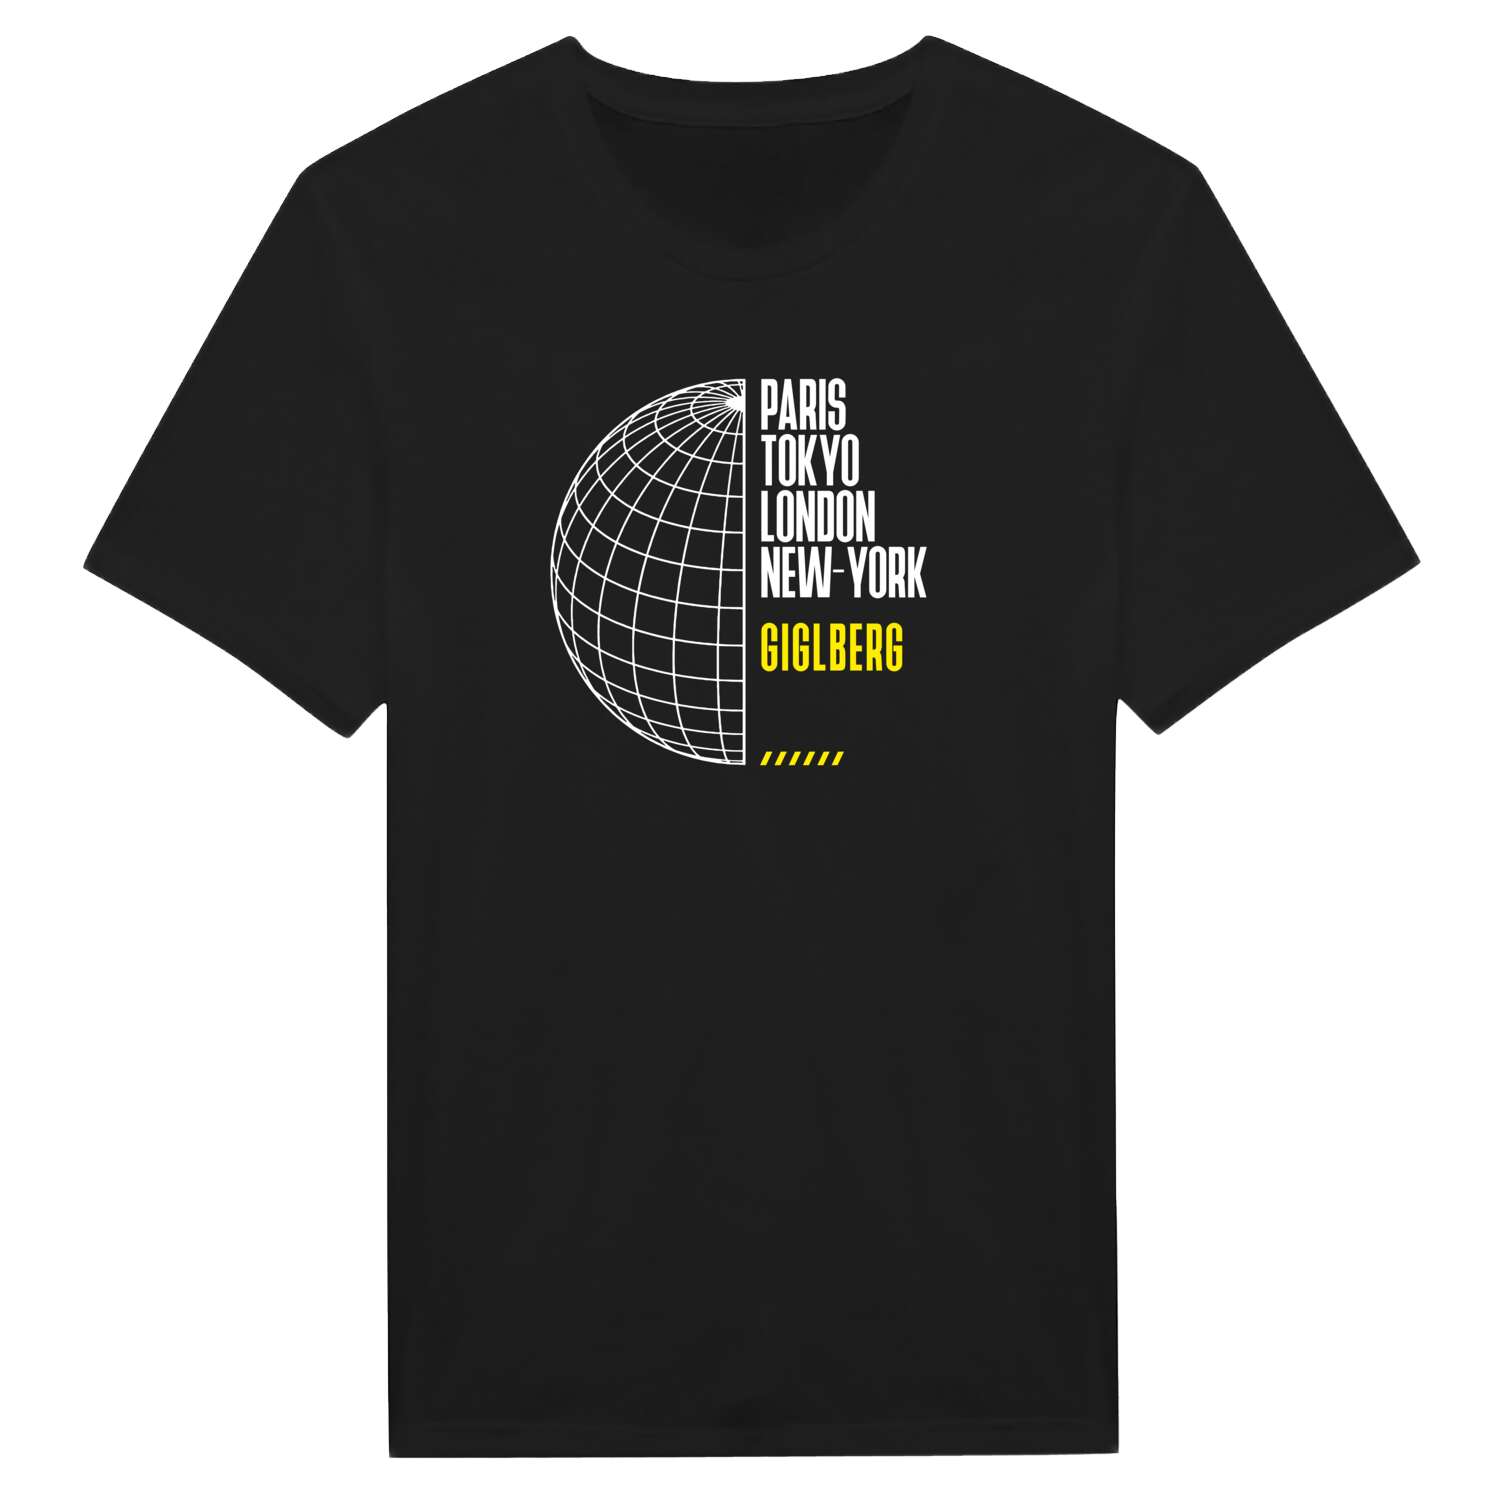 Giglberg T-Shirt »Paris Tokyo London«